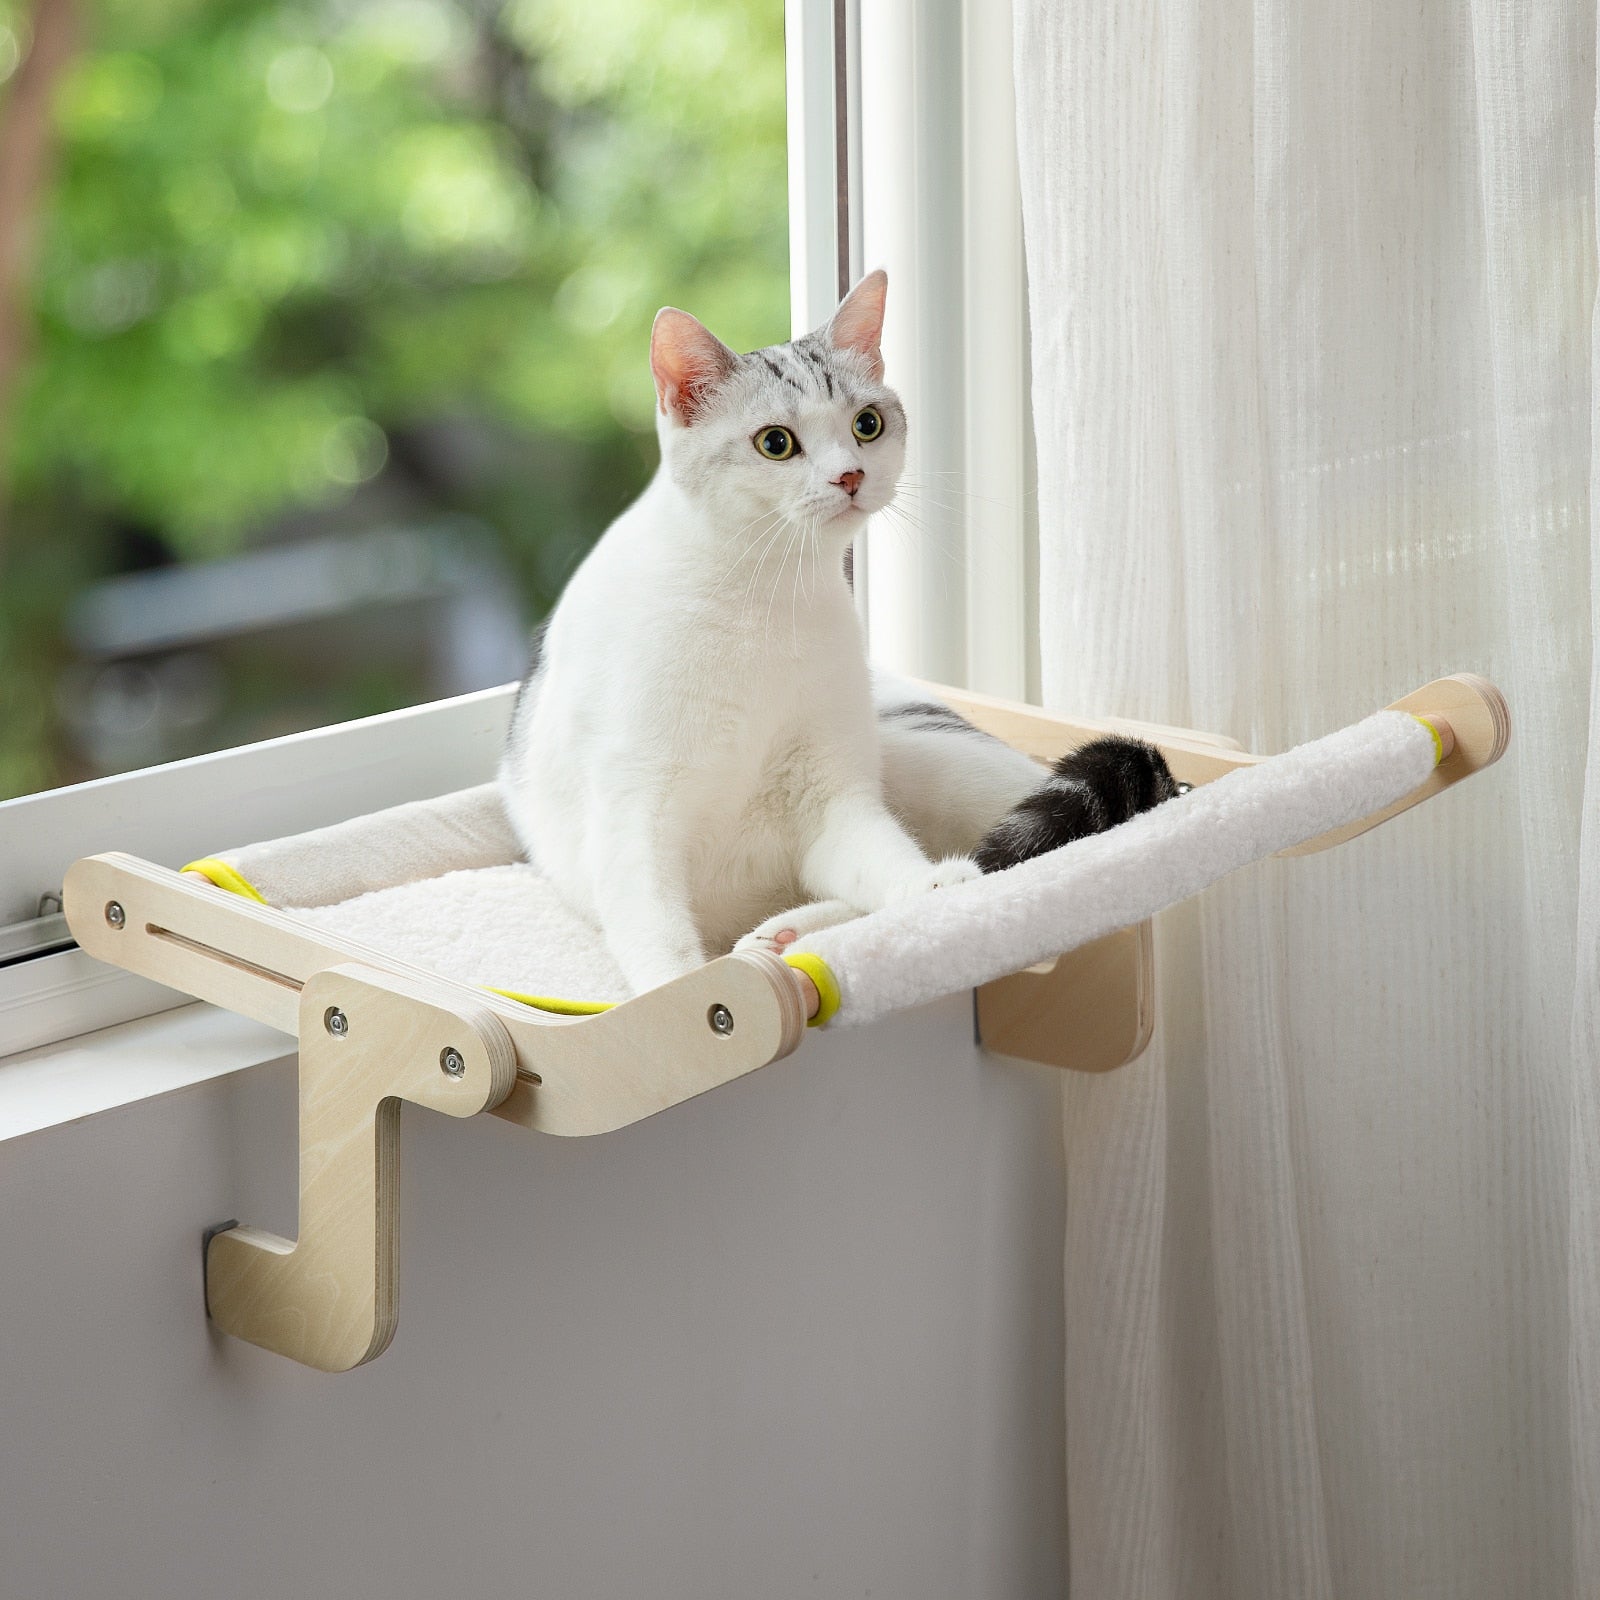 Sturdy Window-mounted cat perch - No drill Cat hammock - No drill cat perch - Free Shipping 